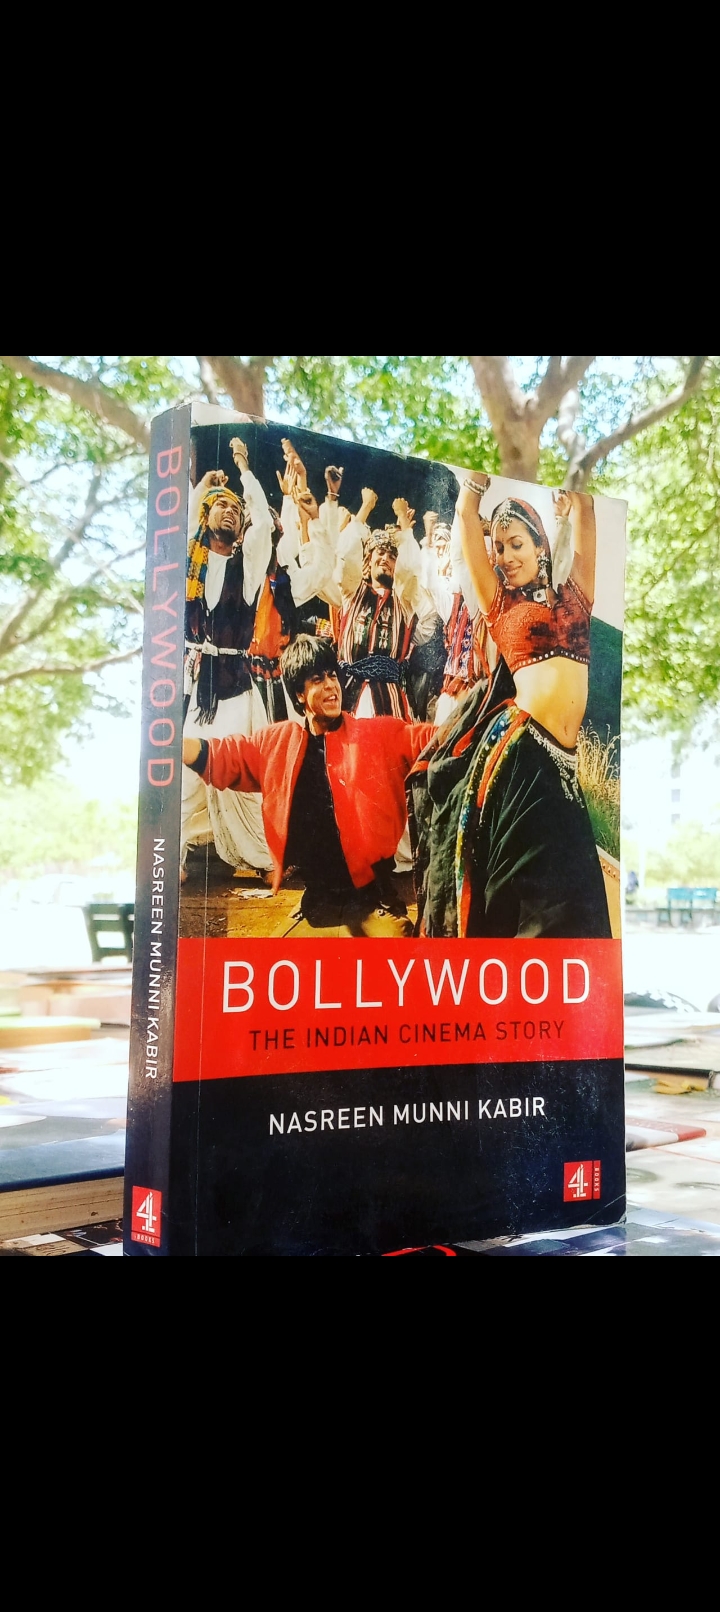 bollywood the indian cinema story by nasreen munni kabir. original paperback